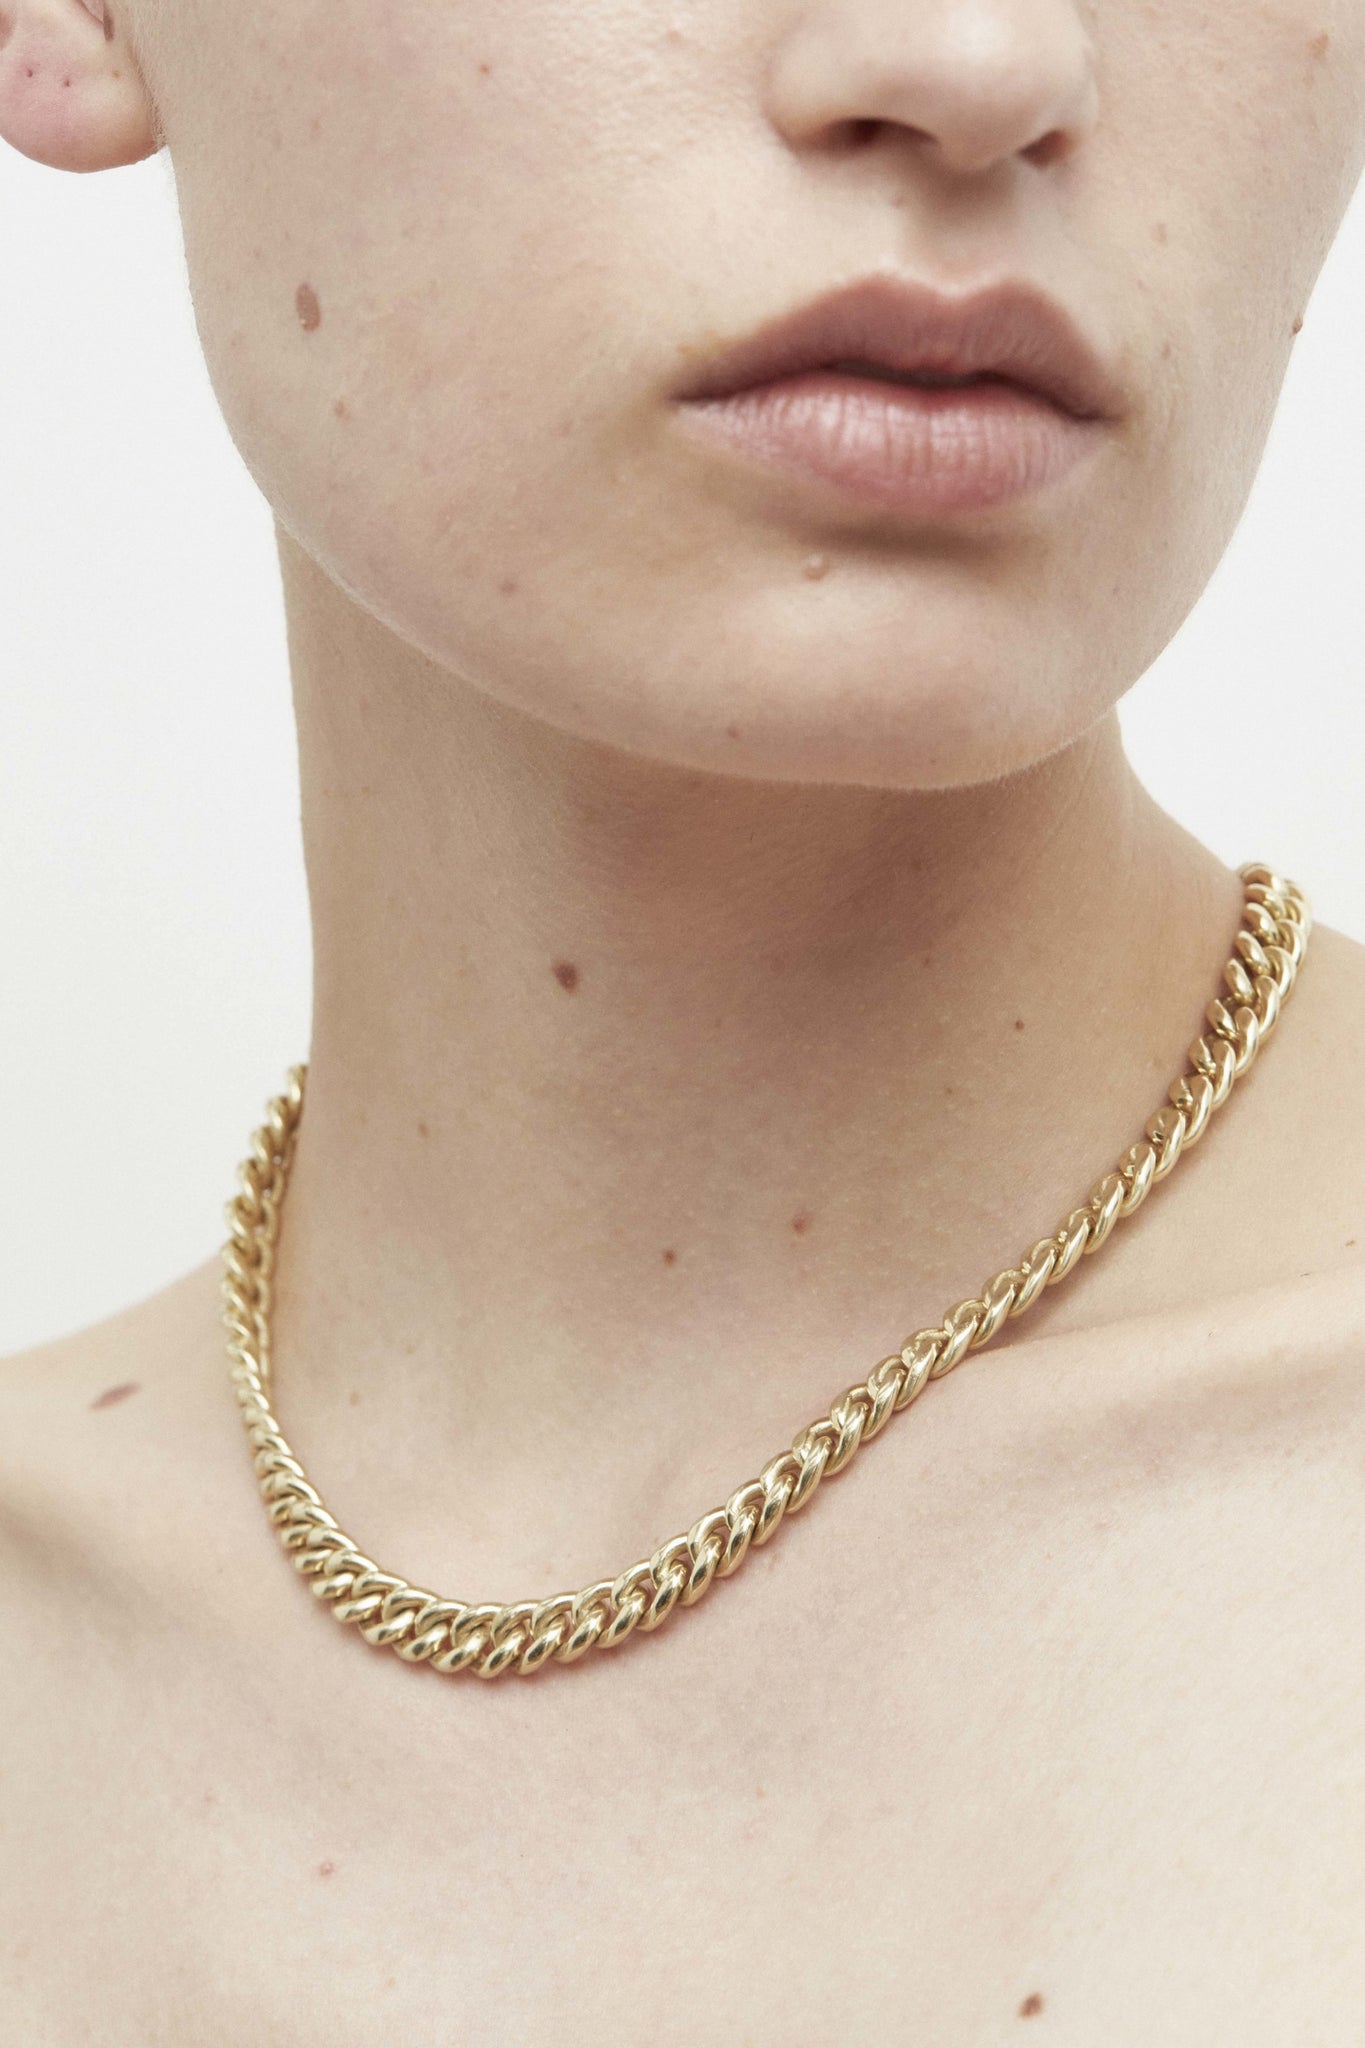 Molded Chain Necklace - Necklaces - Cornelia Webb - 6